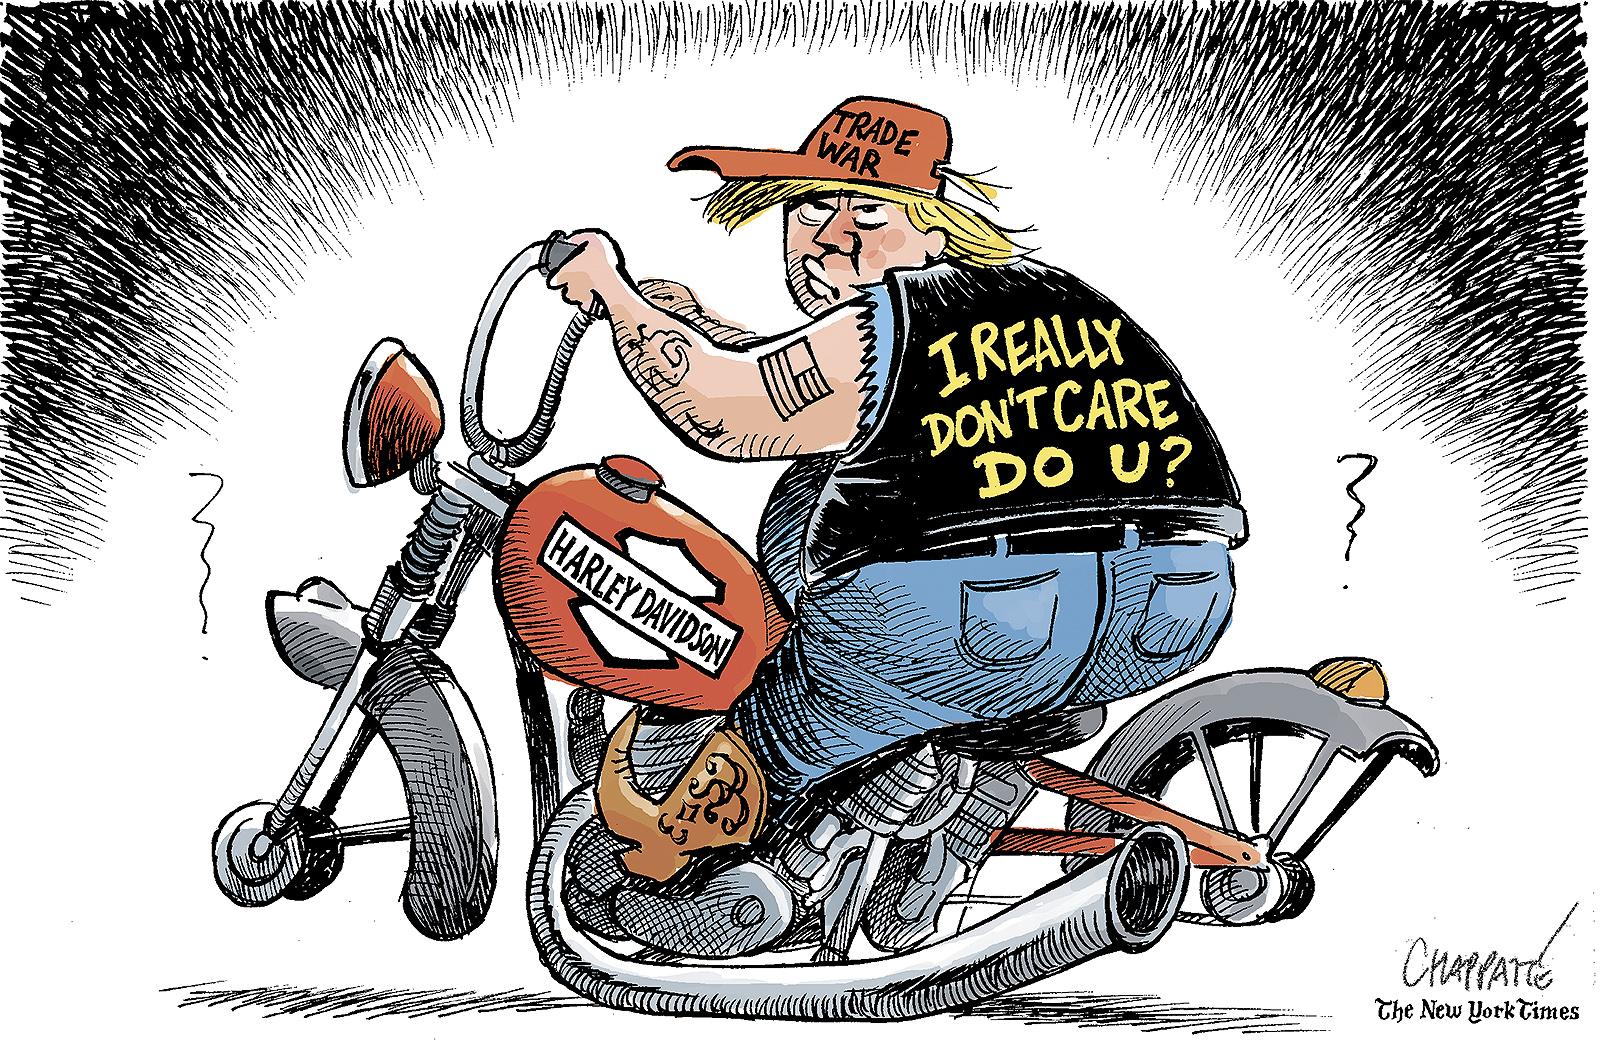 Harley Davidson in the crossfire